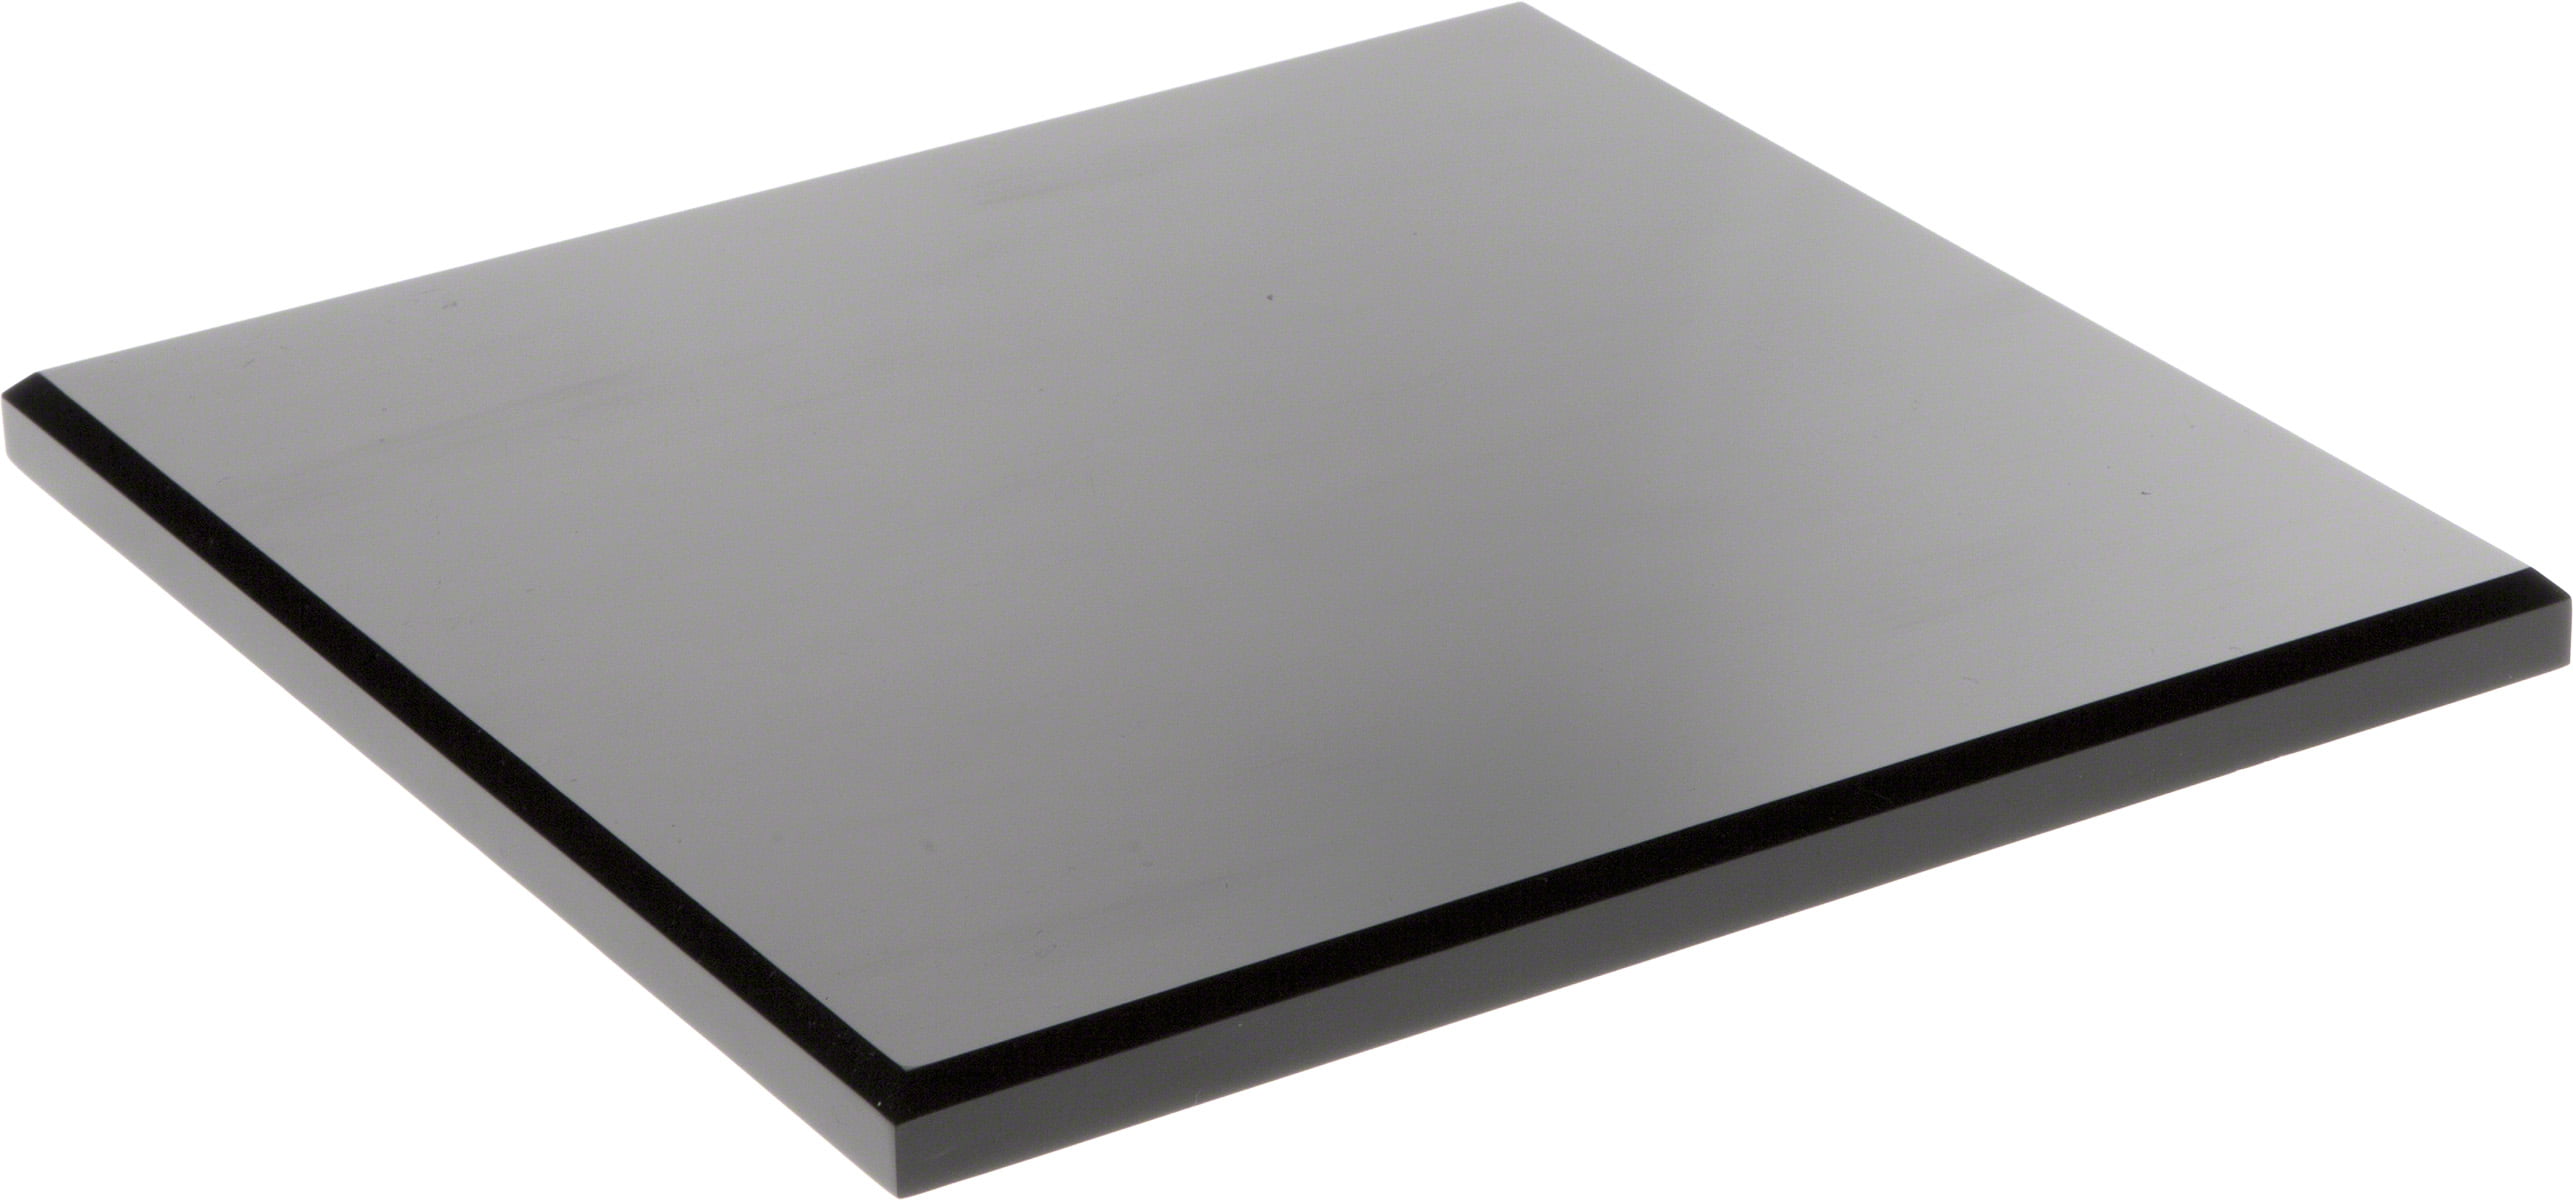 Plymor Black Acrylic Square Beveled Display Base 0.5" H x 1.5" W x 1.5" D 